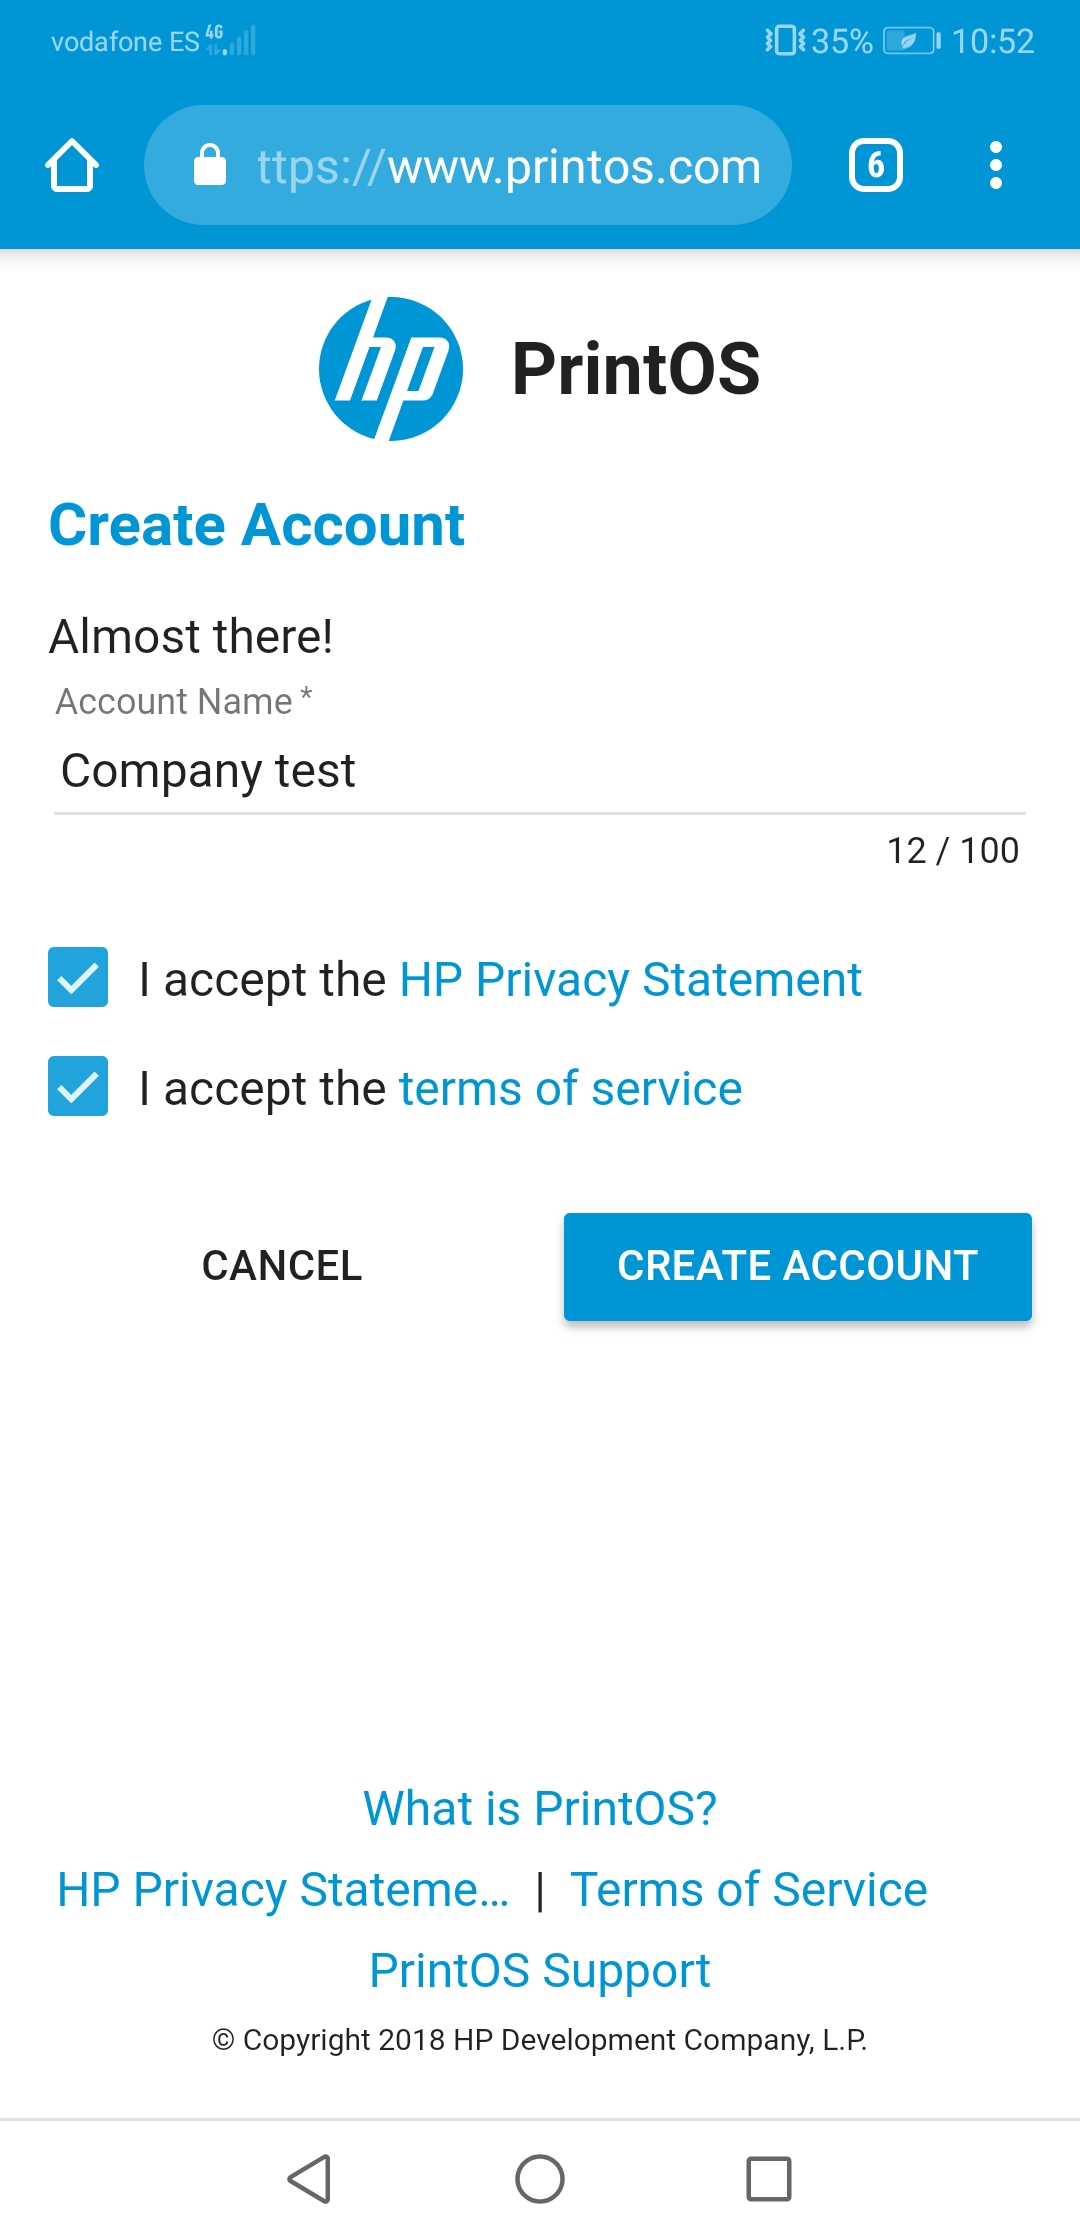 HP Latex PrintOS sign up account